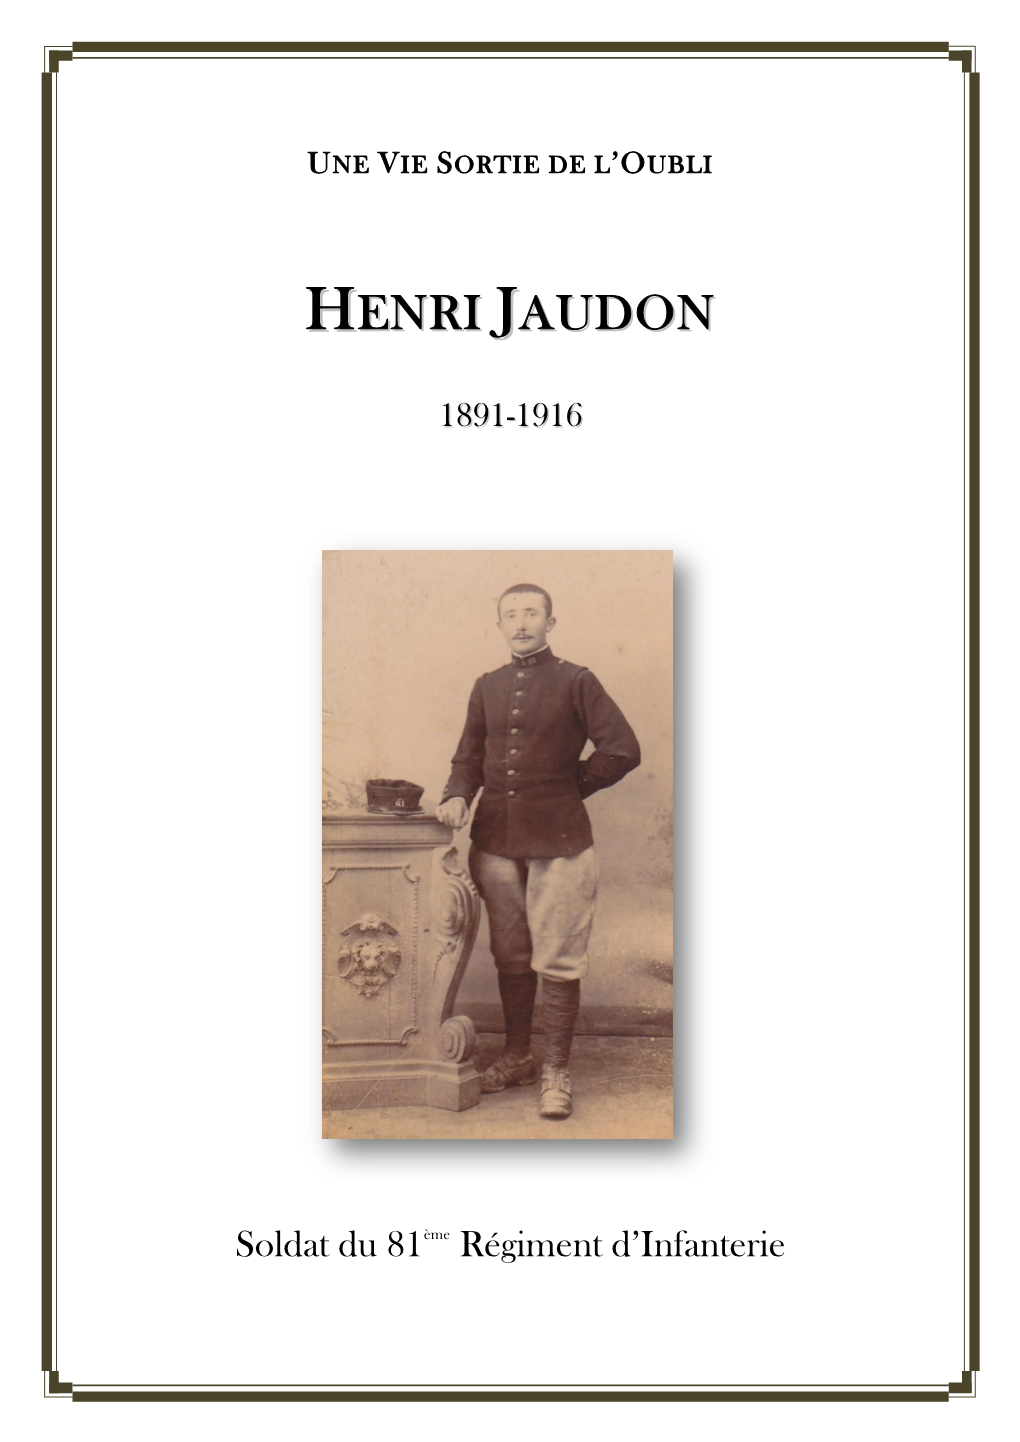 Henri Jaudon